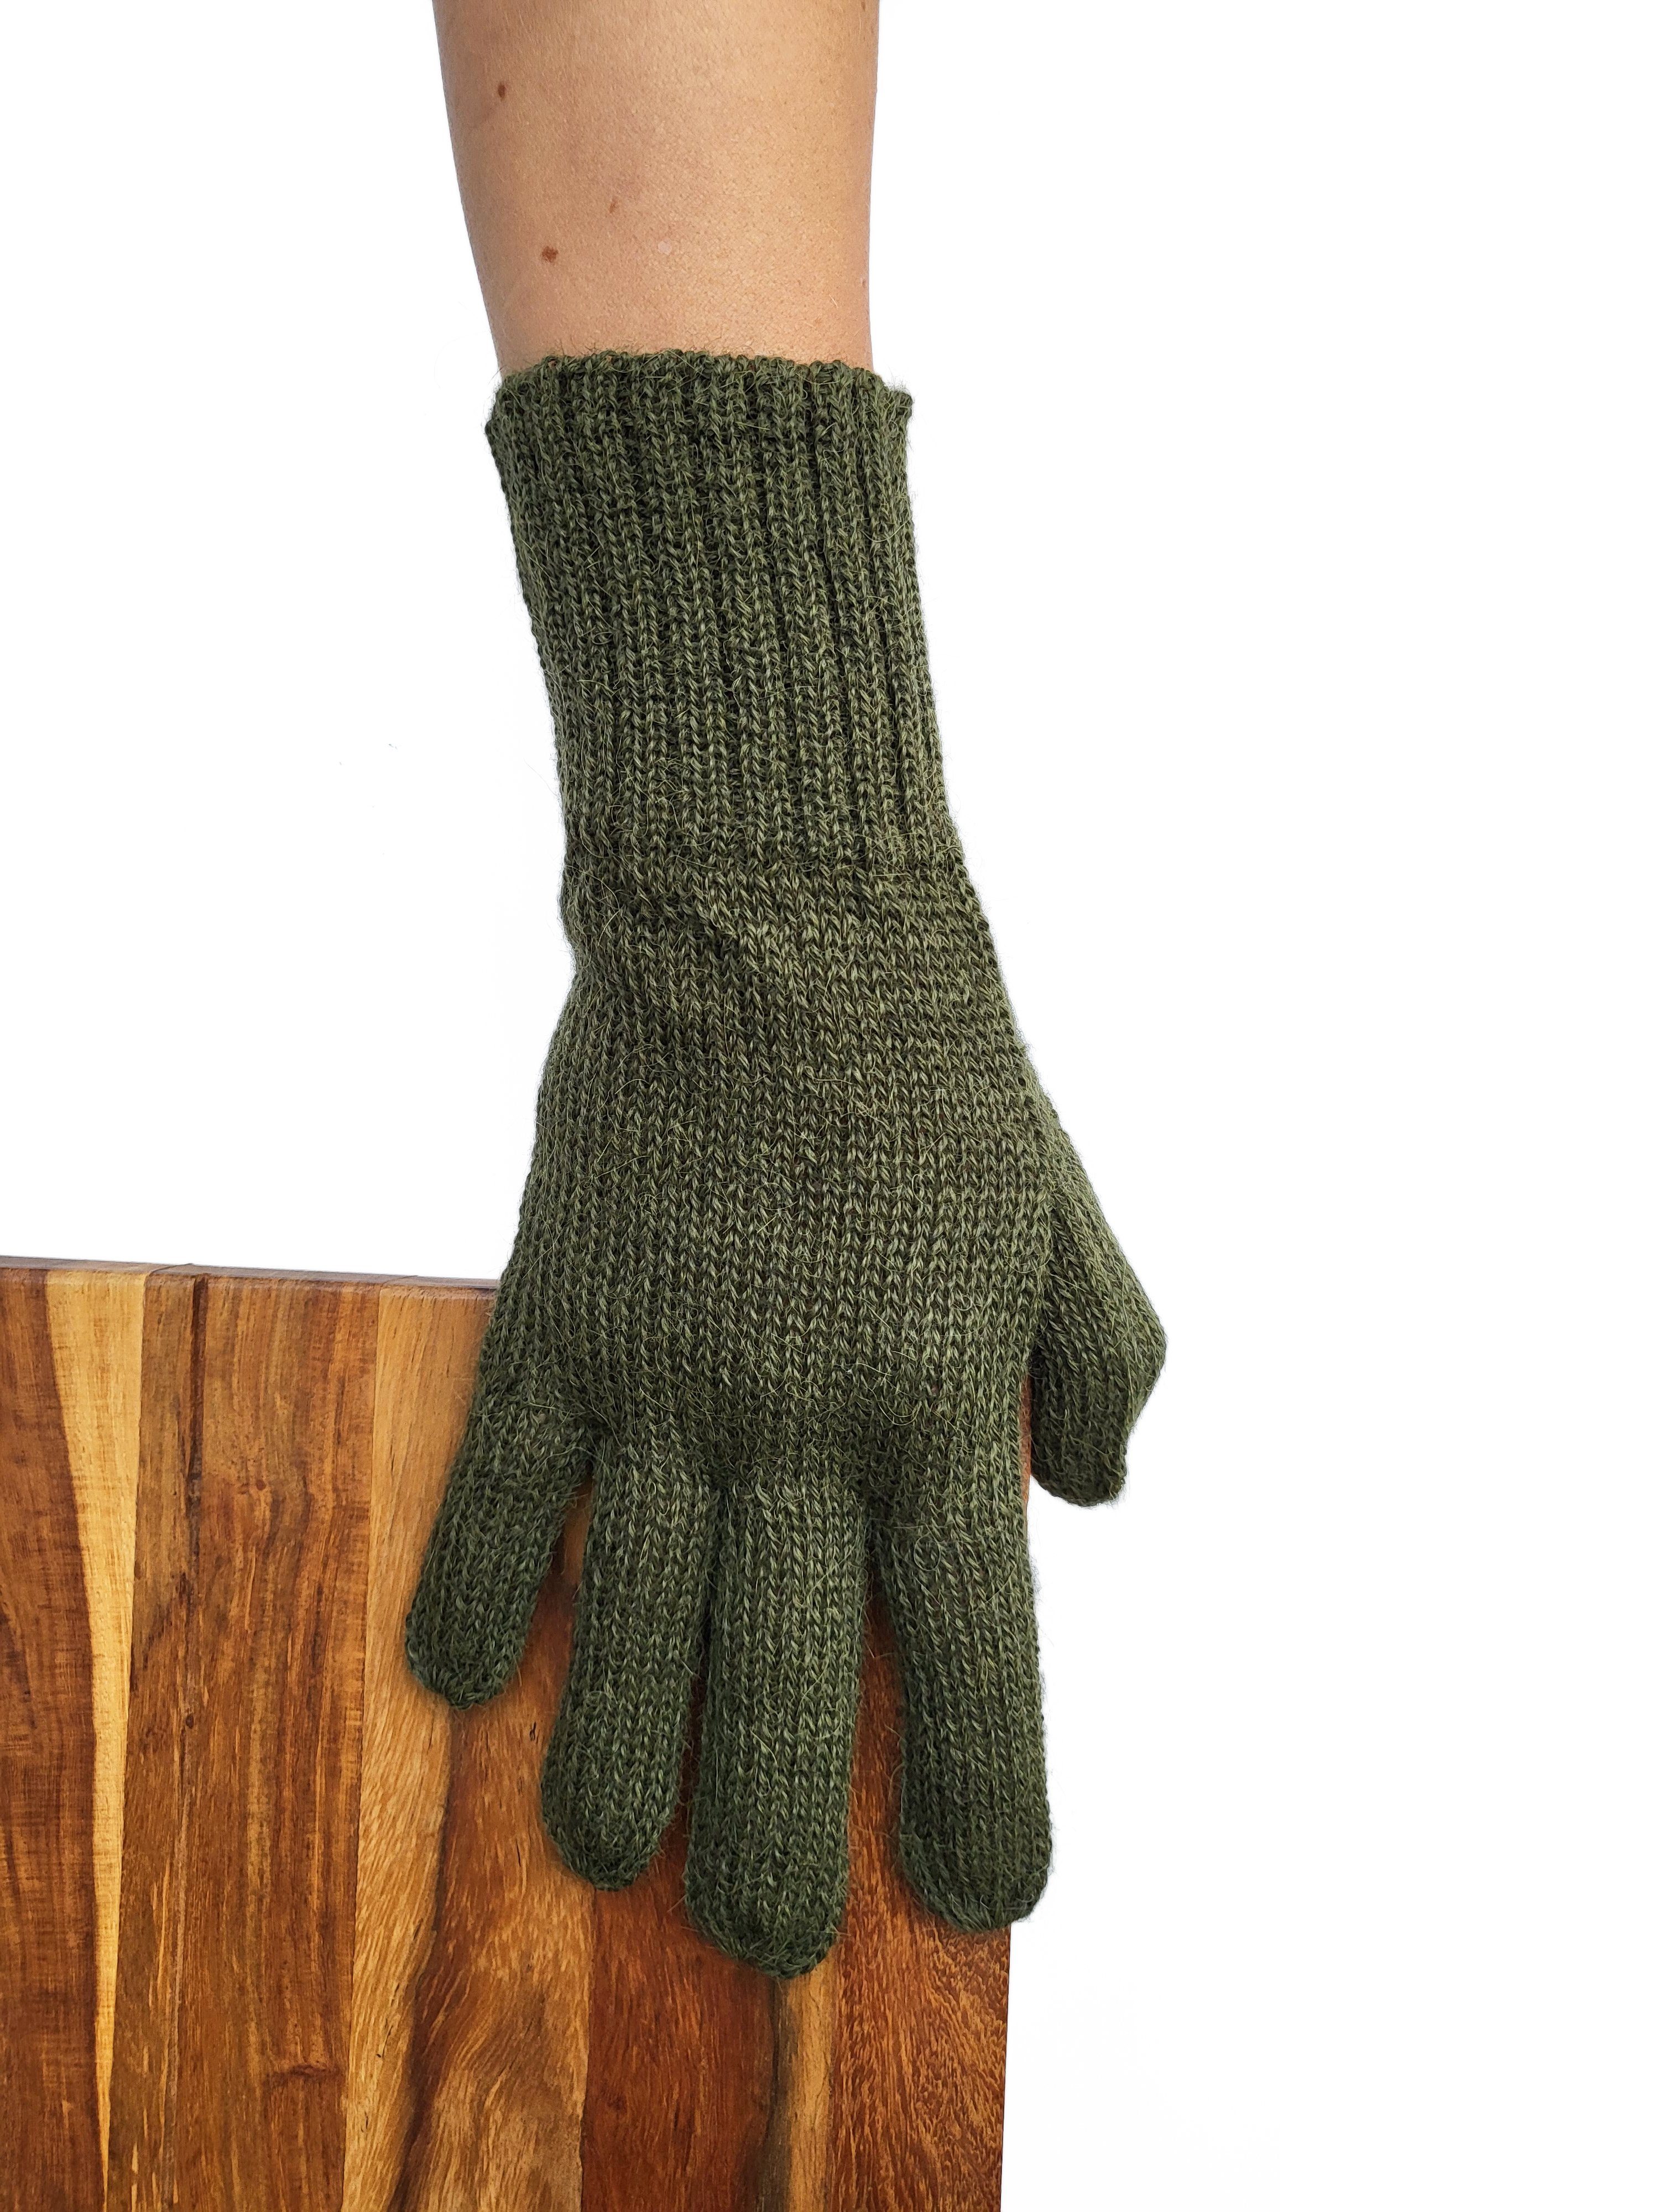 Posh Gear Strickhandschuhe Guantino Alpaka Fingerhandschuhe grün Alpakawolle oliv 100% aus